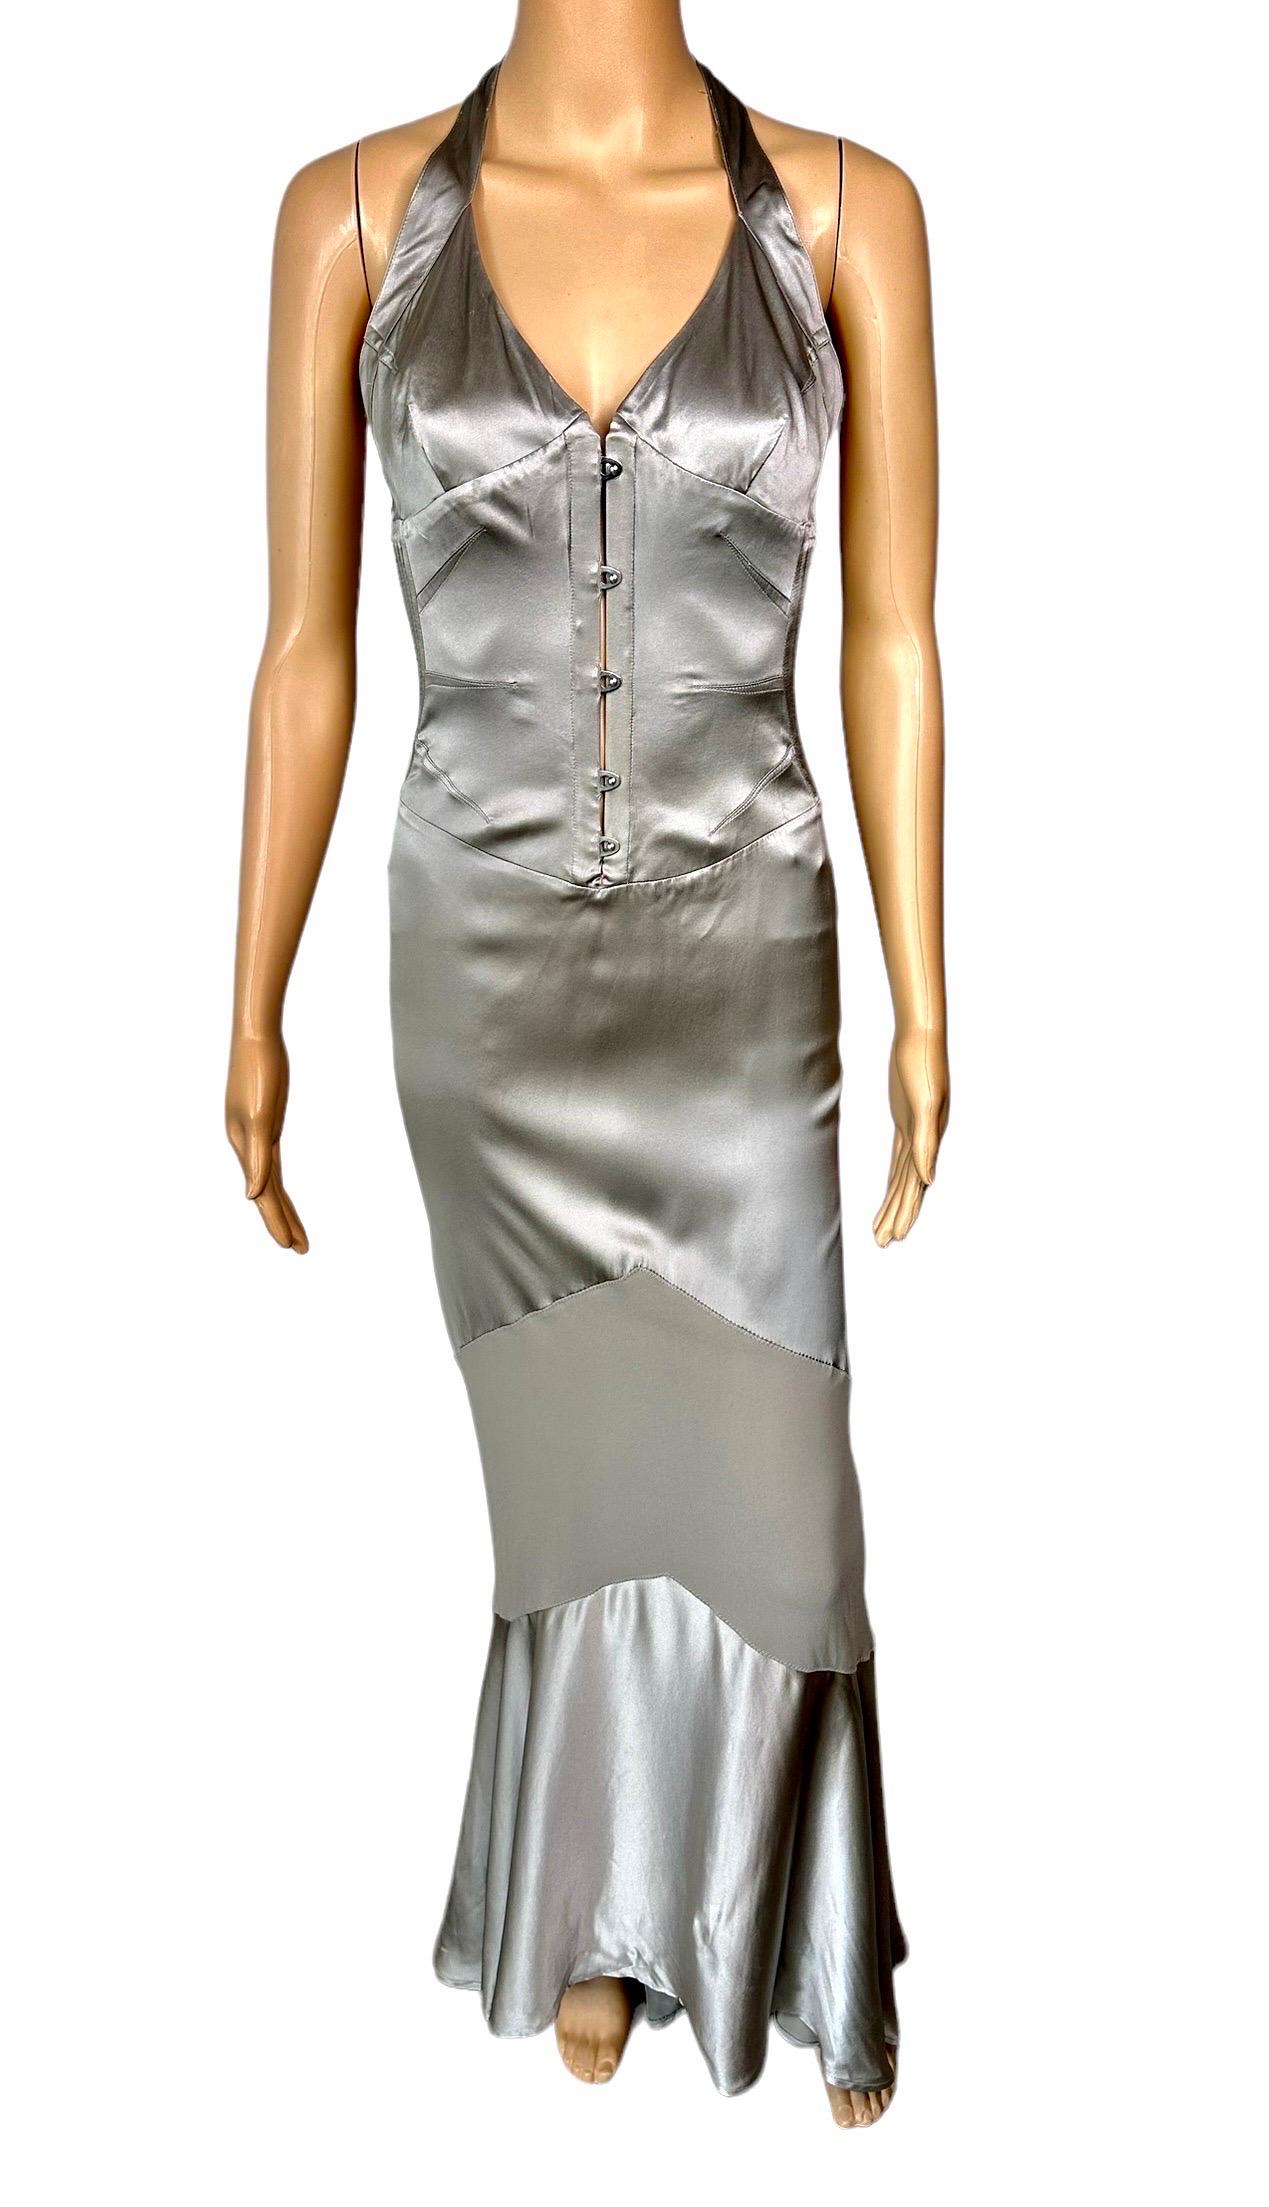 Roberto Cavalli S/S 2003 Corset Plunged Décolleté Silver Evening Dress Gown  For Sale 2